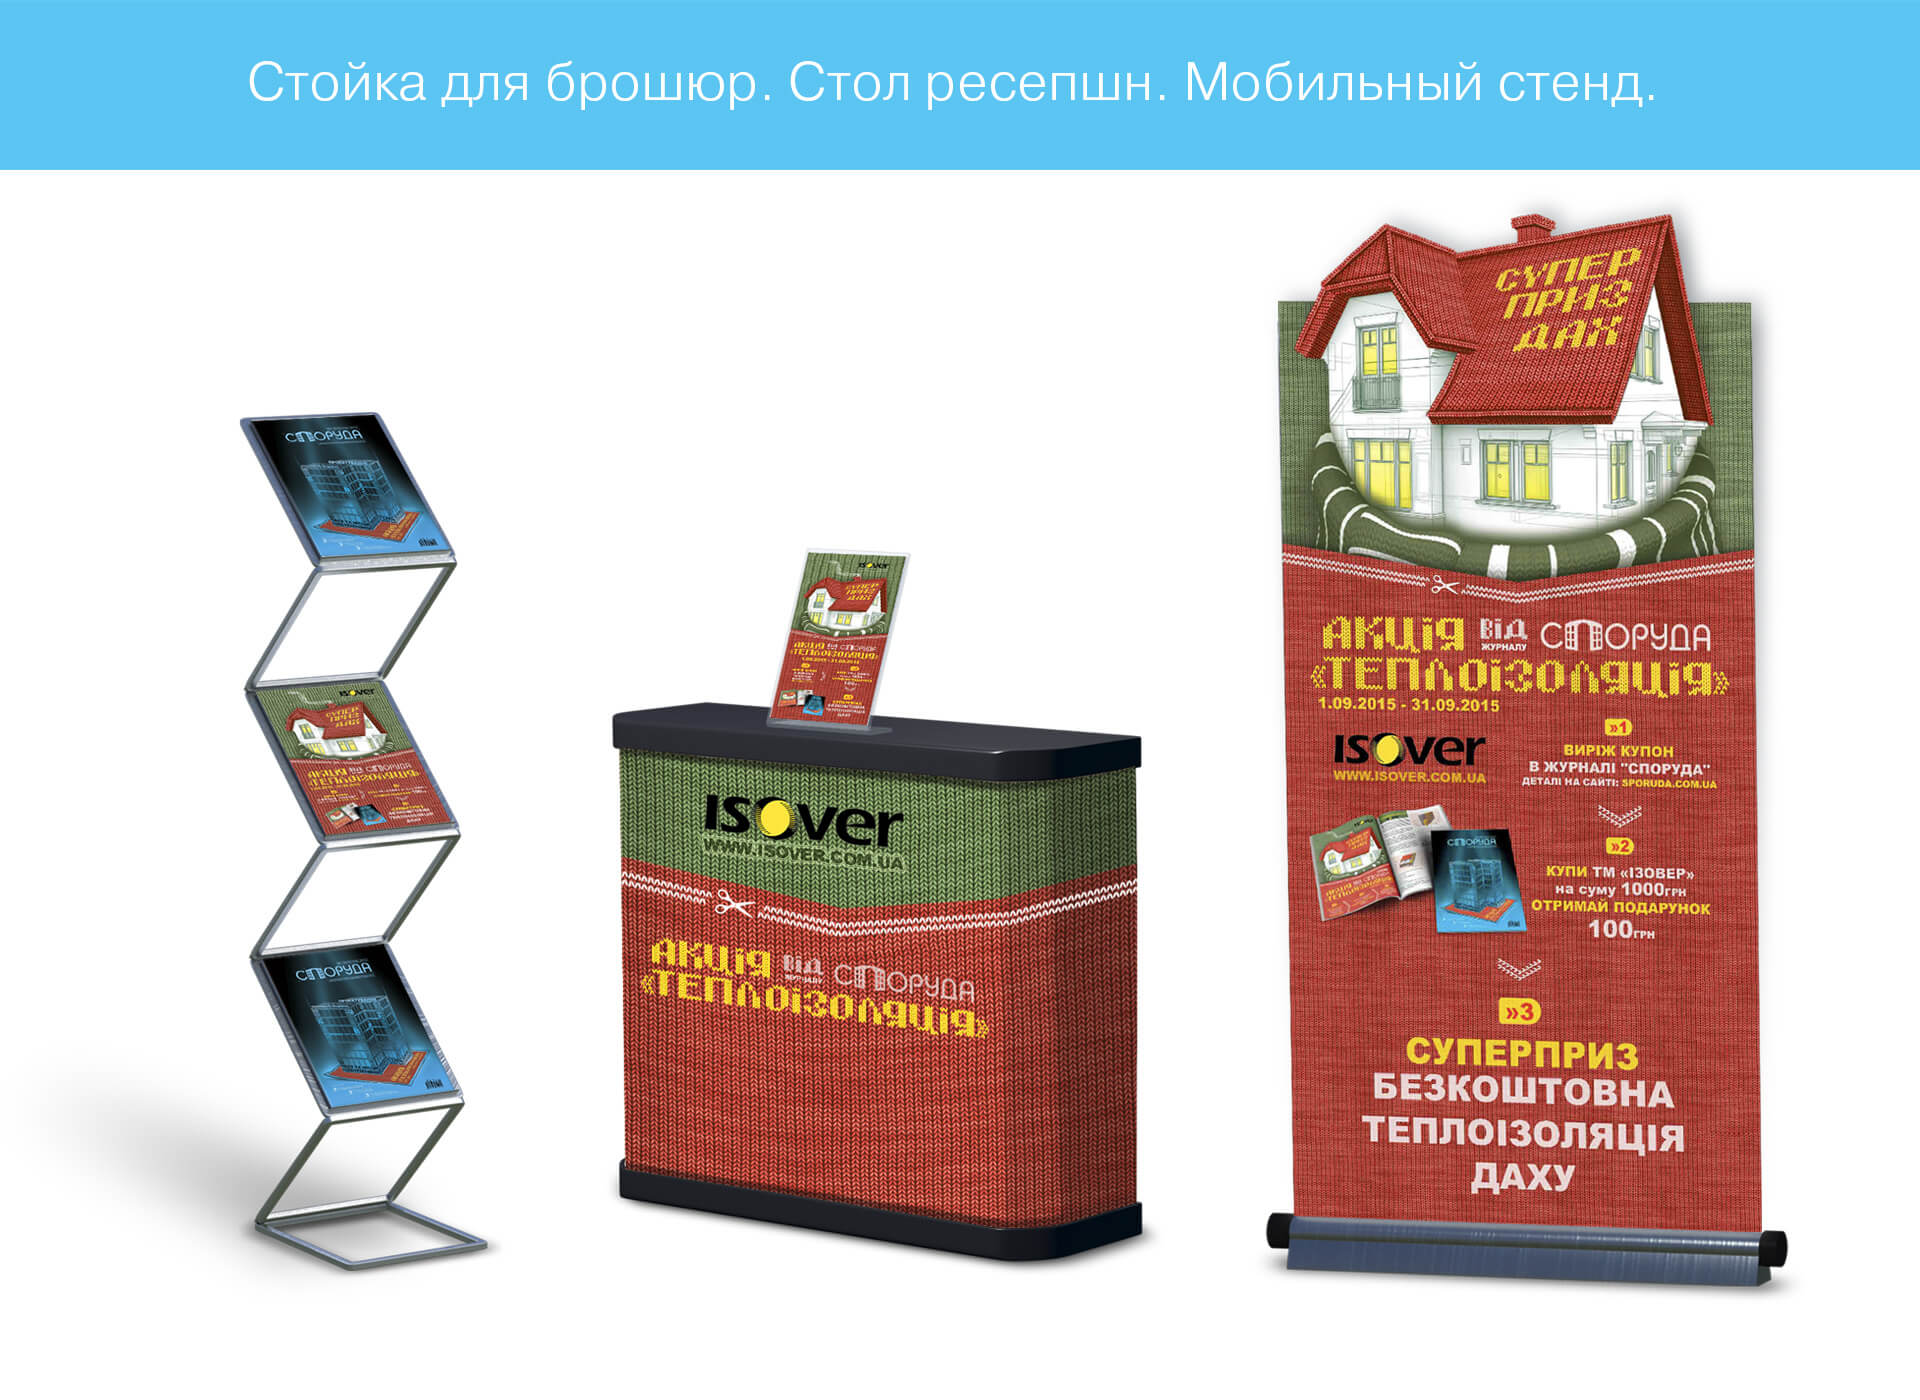 prokochuk_irina_architectural-magazine-sporuda_advertising-campaign_2